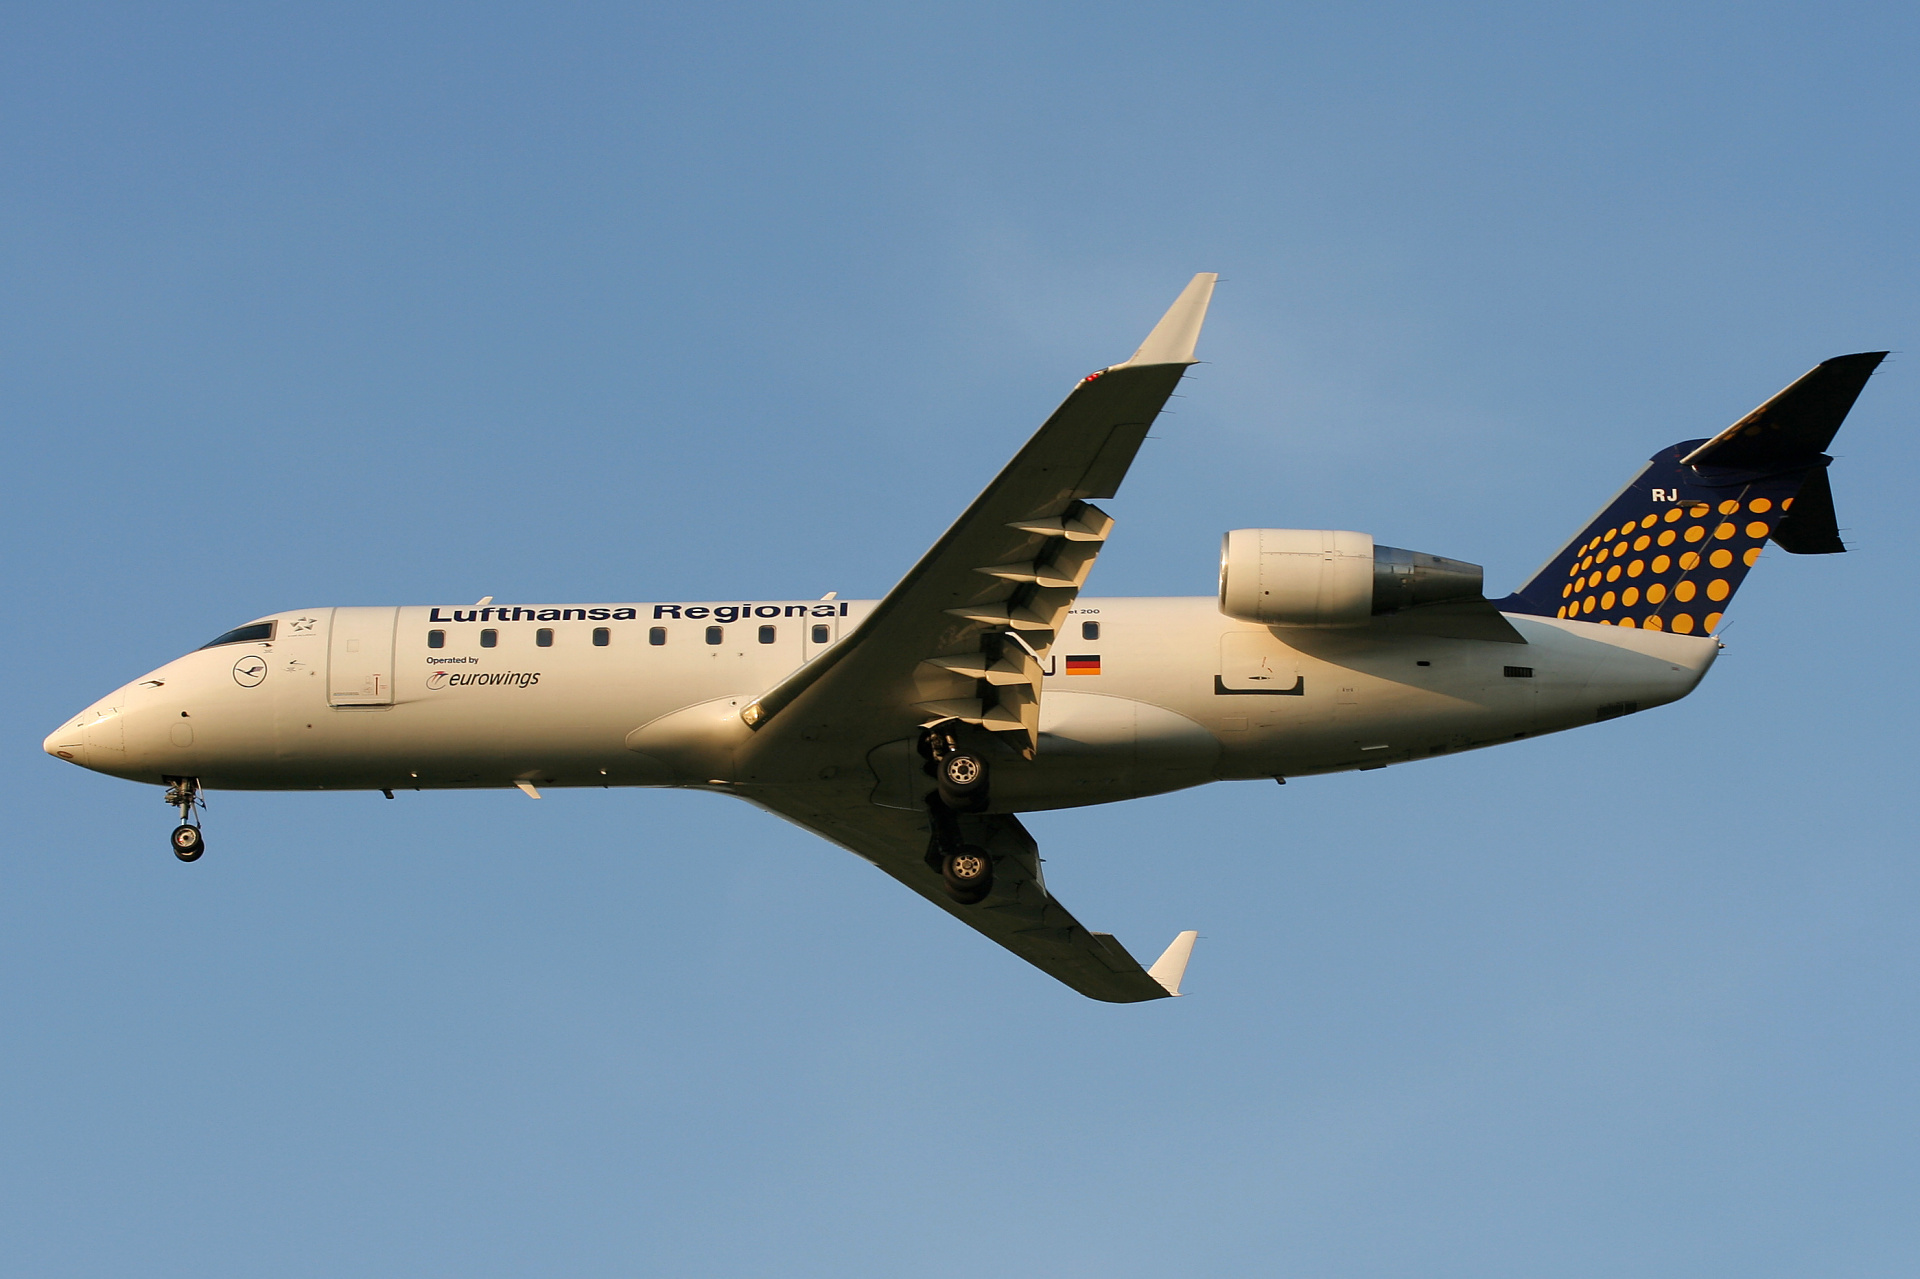 D-ACRJ (Eurowings) (Aircraft » EPWA Spotting » Bombardier CL-600 Regional Jet » CRJ-200 » Lufthansa Regional)